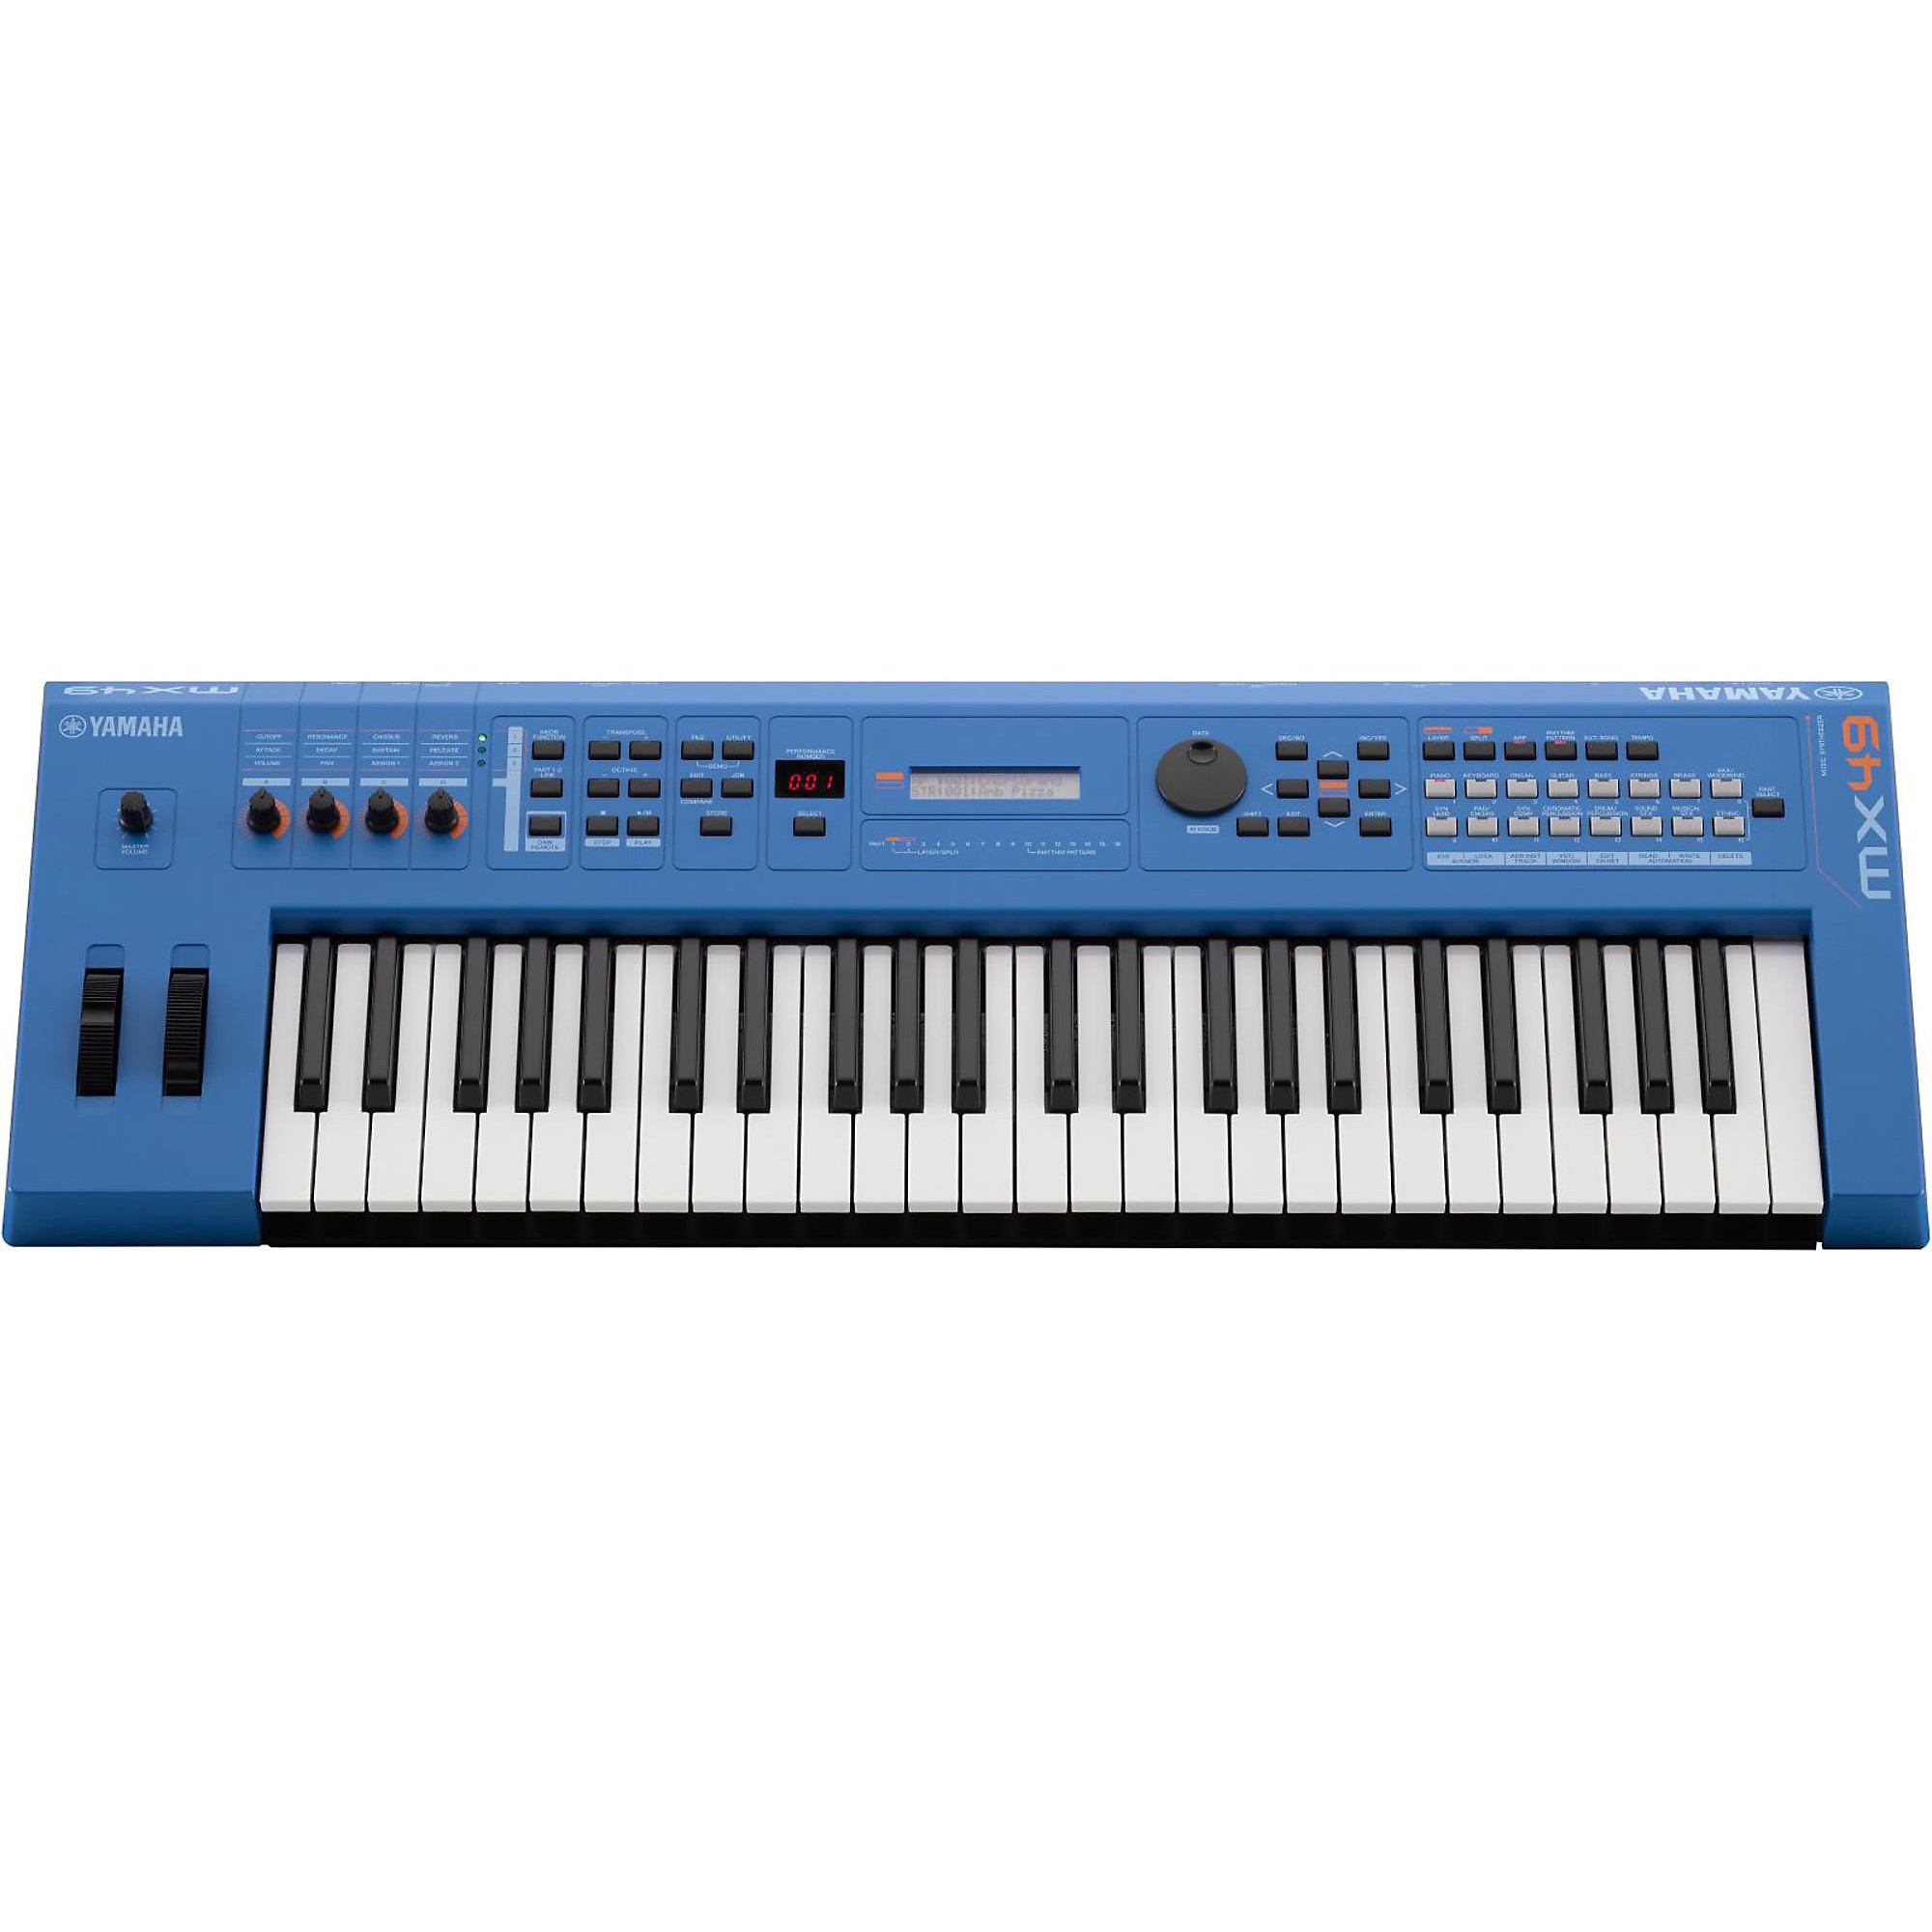 Synthesizers & Music Production Tools - Products - Yamaha USA